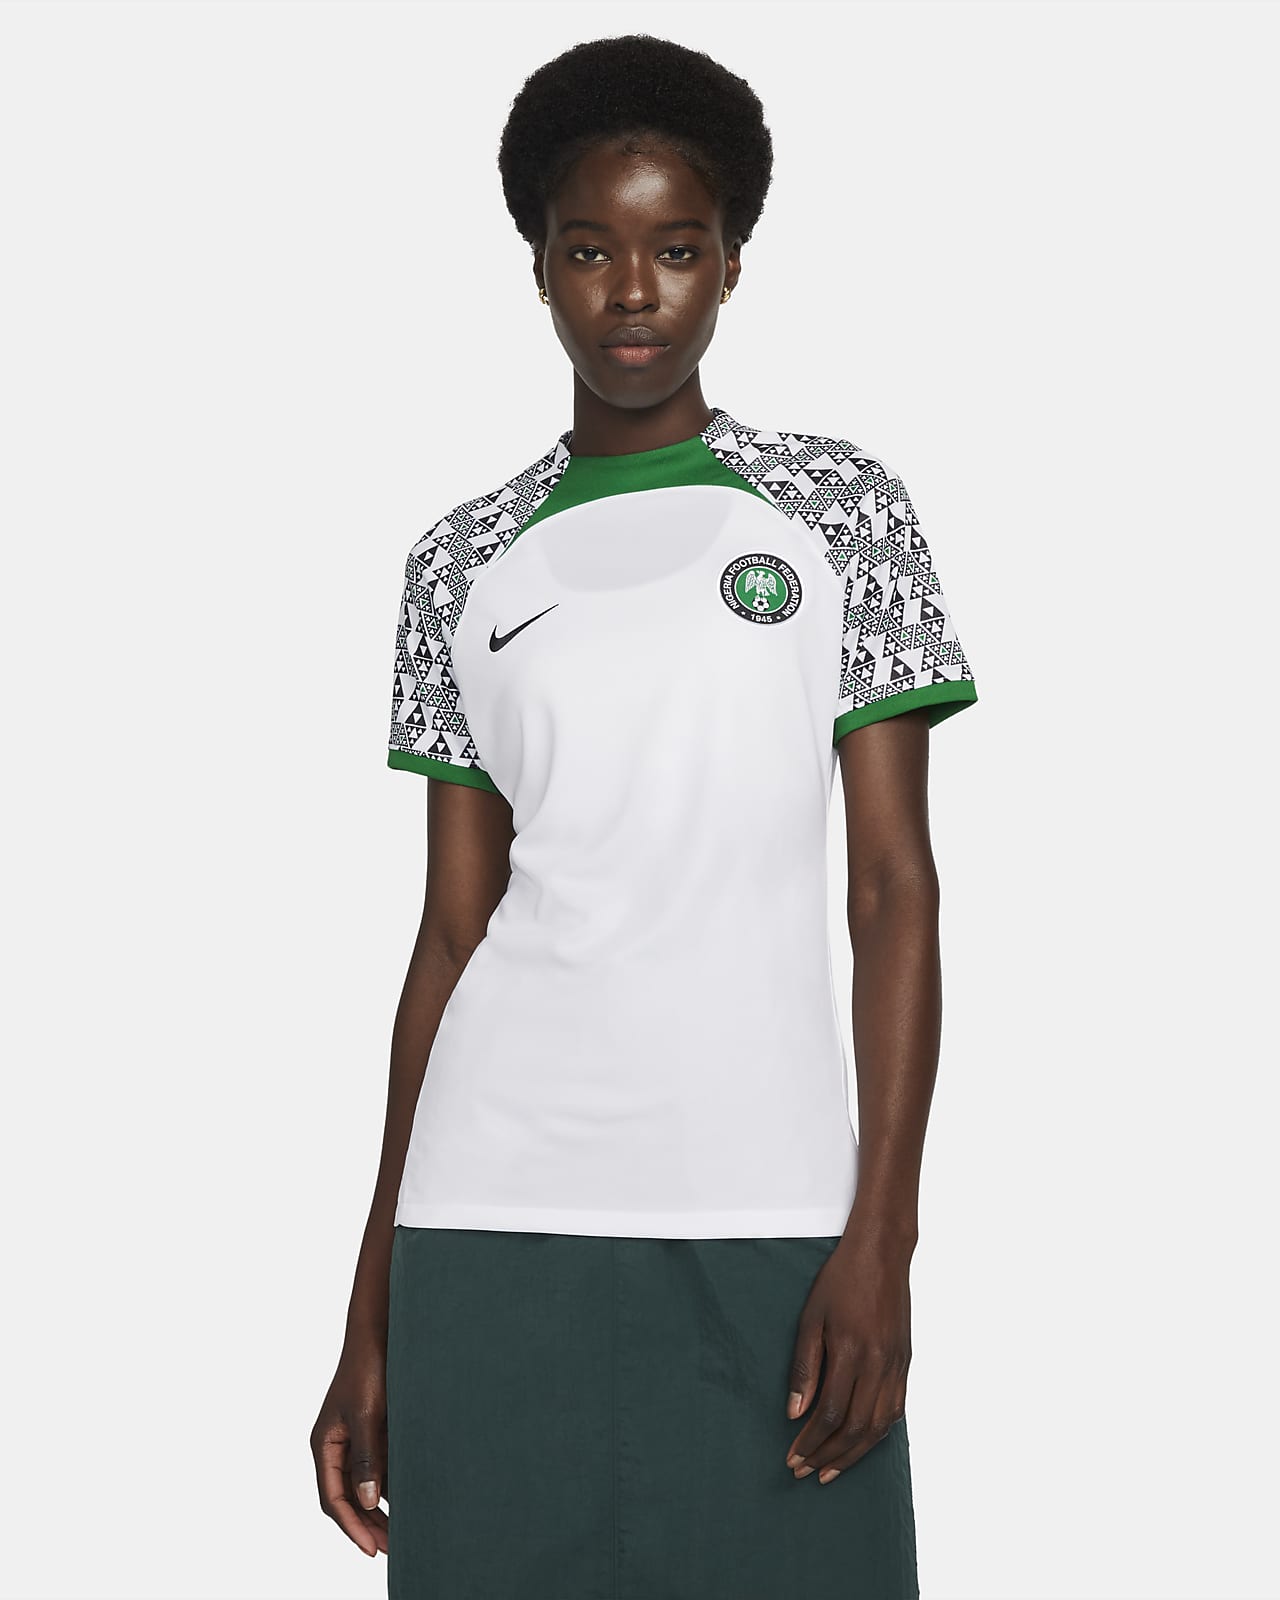 Stadium Away Women's Nike Dri-FIT Football Shirt. LU